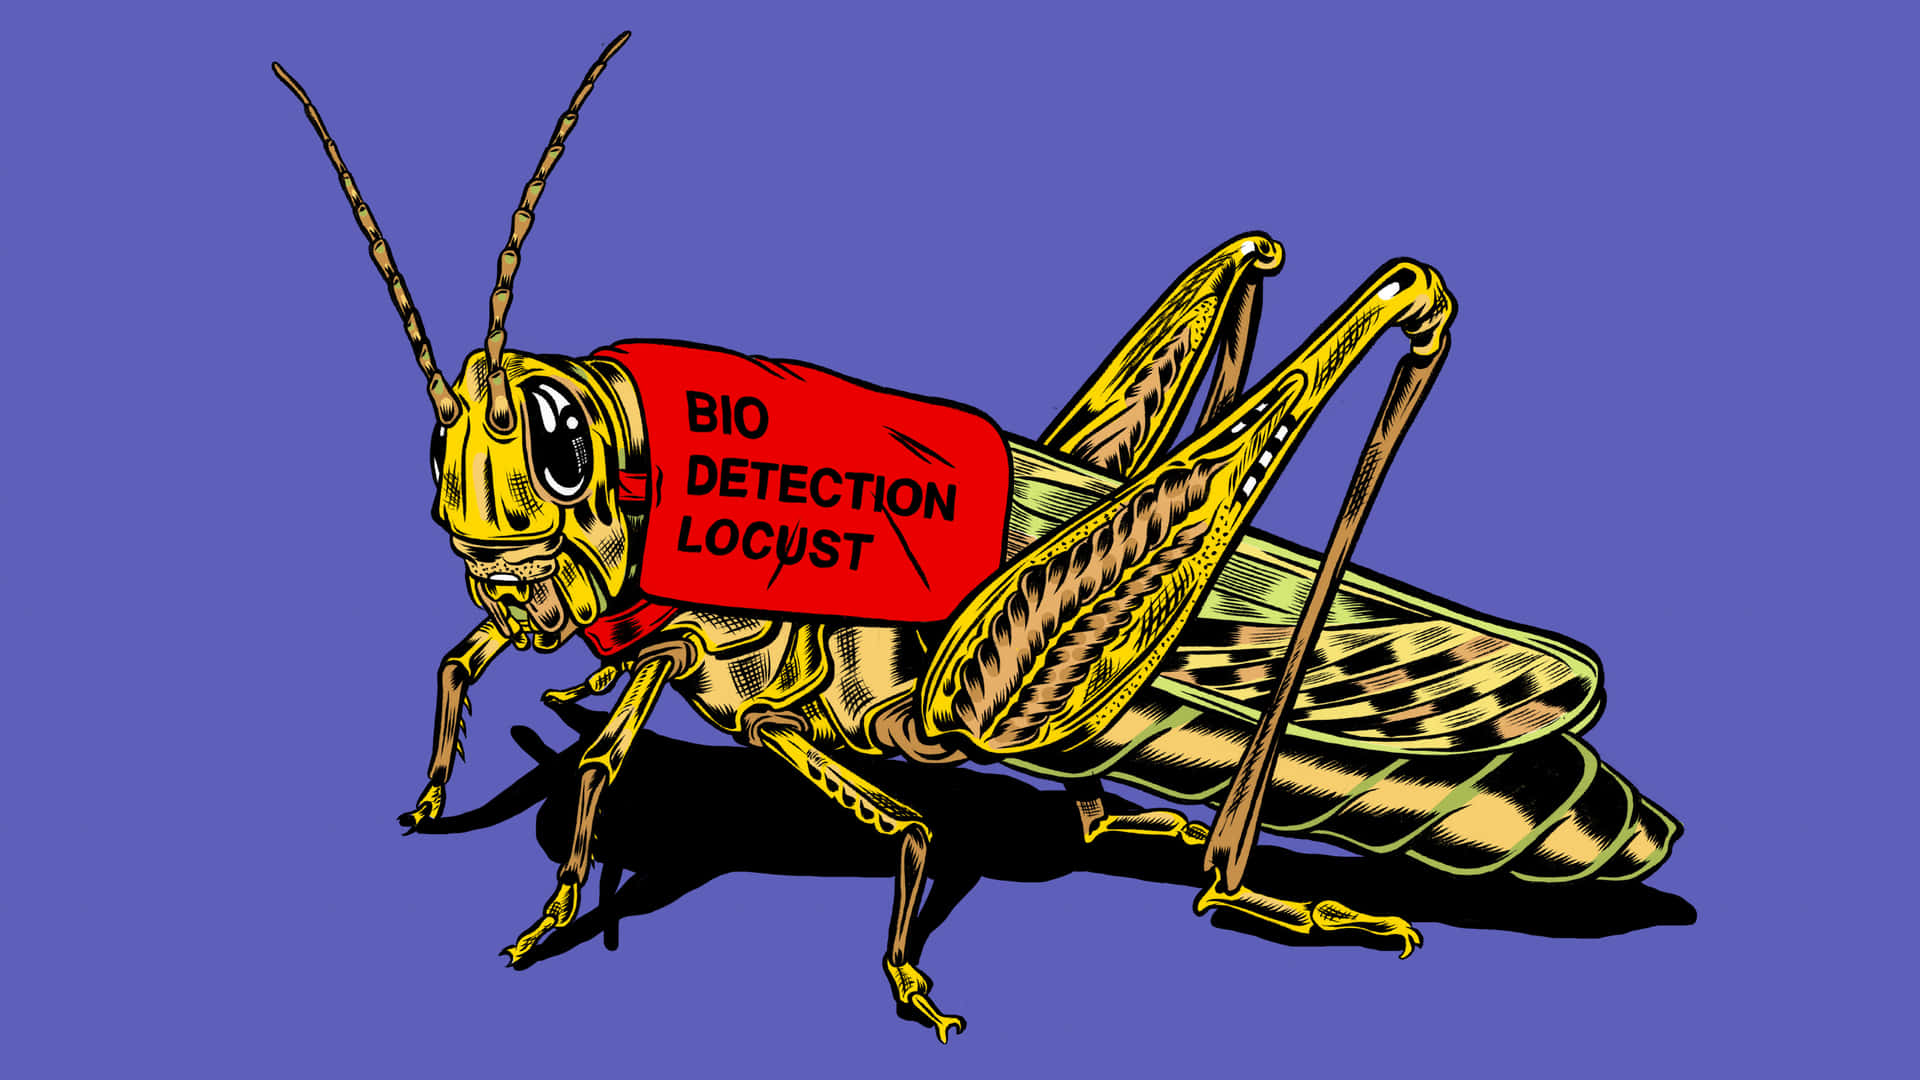 Bio Detection Locust Illustration Wallpaper